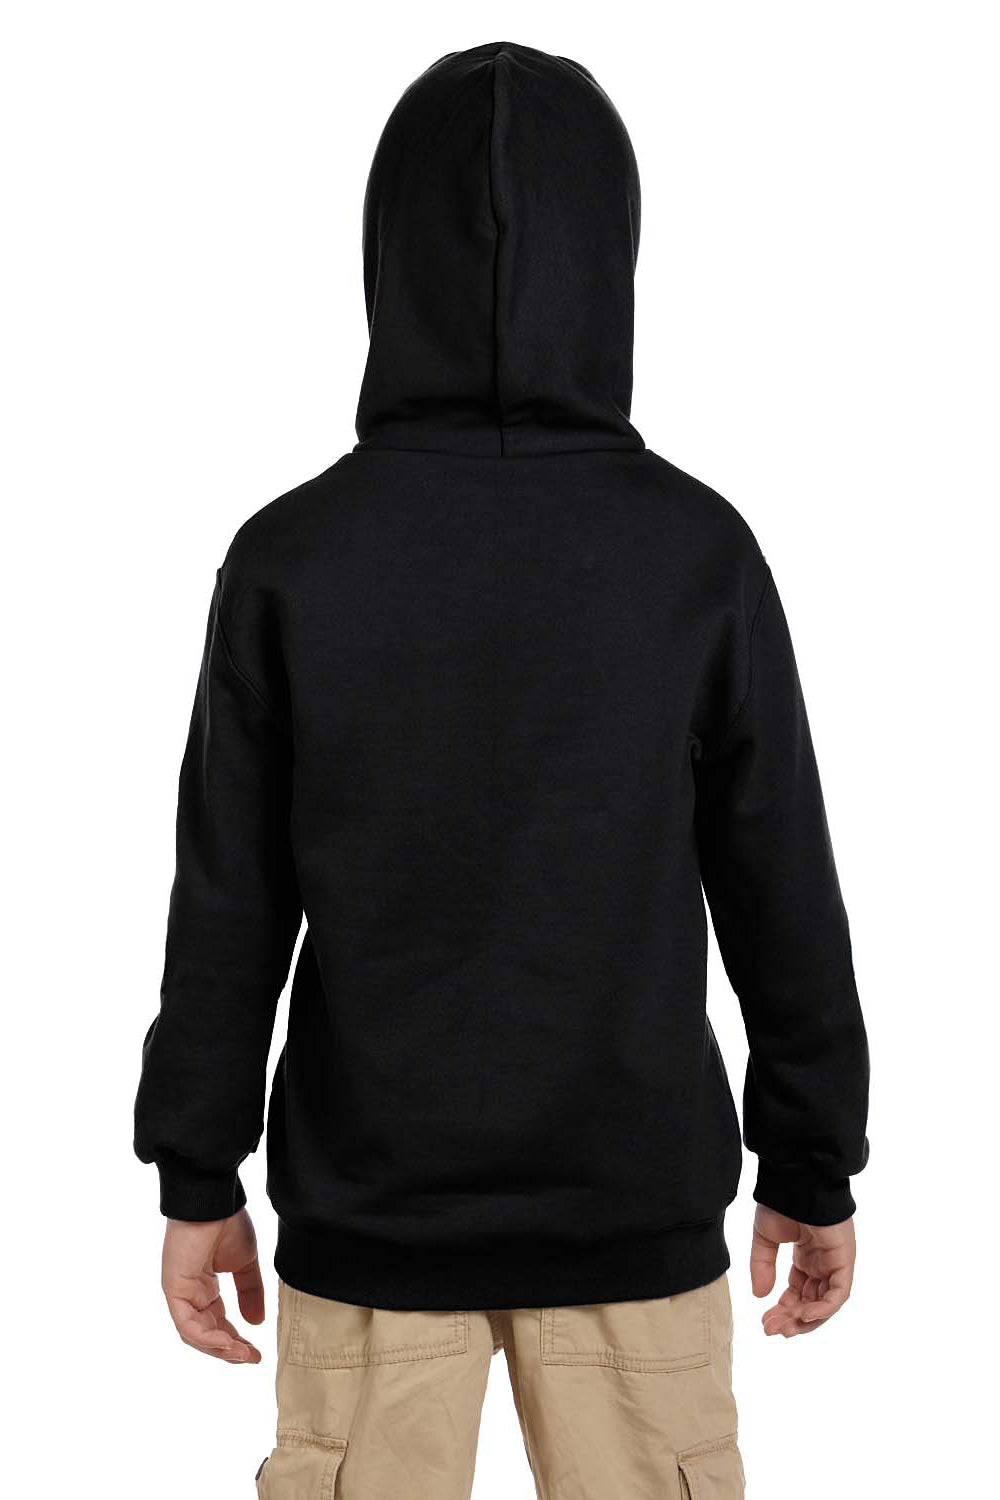 Champion S790 Youth Double Dry Eco Moisture Wicking Fleece Hooded Sweatshirt Hoodie Black Back